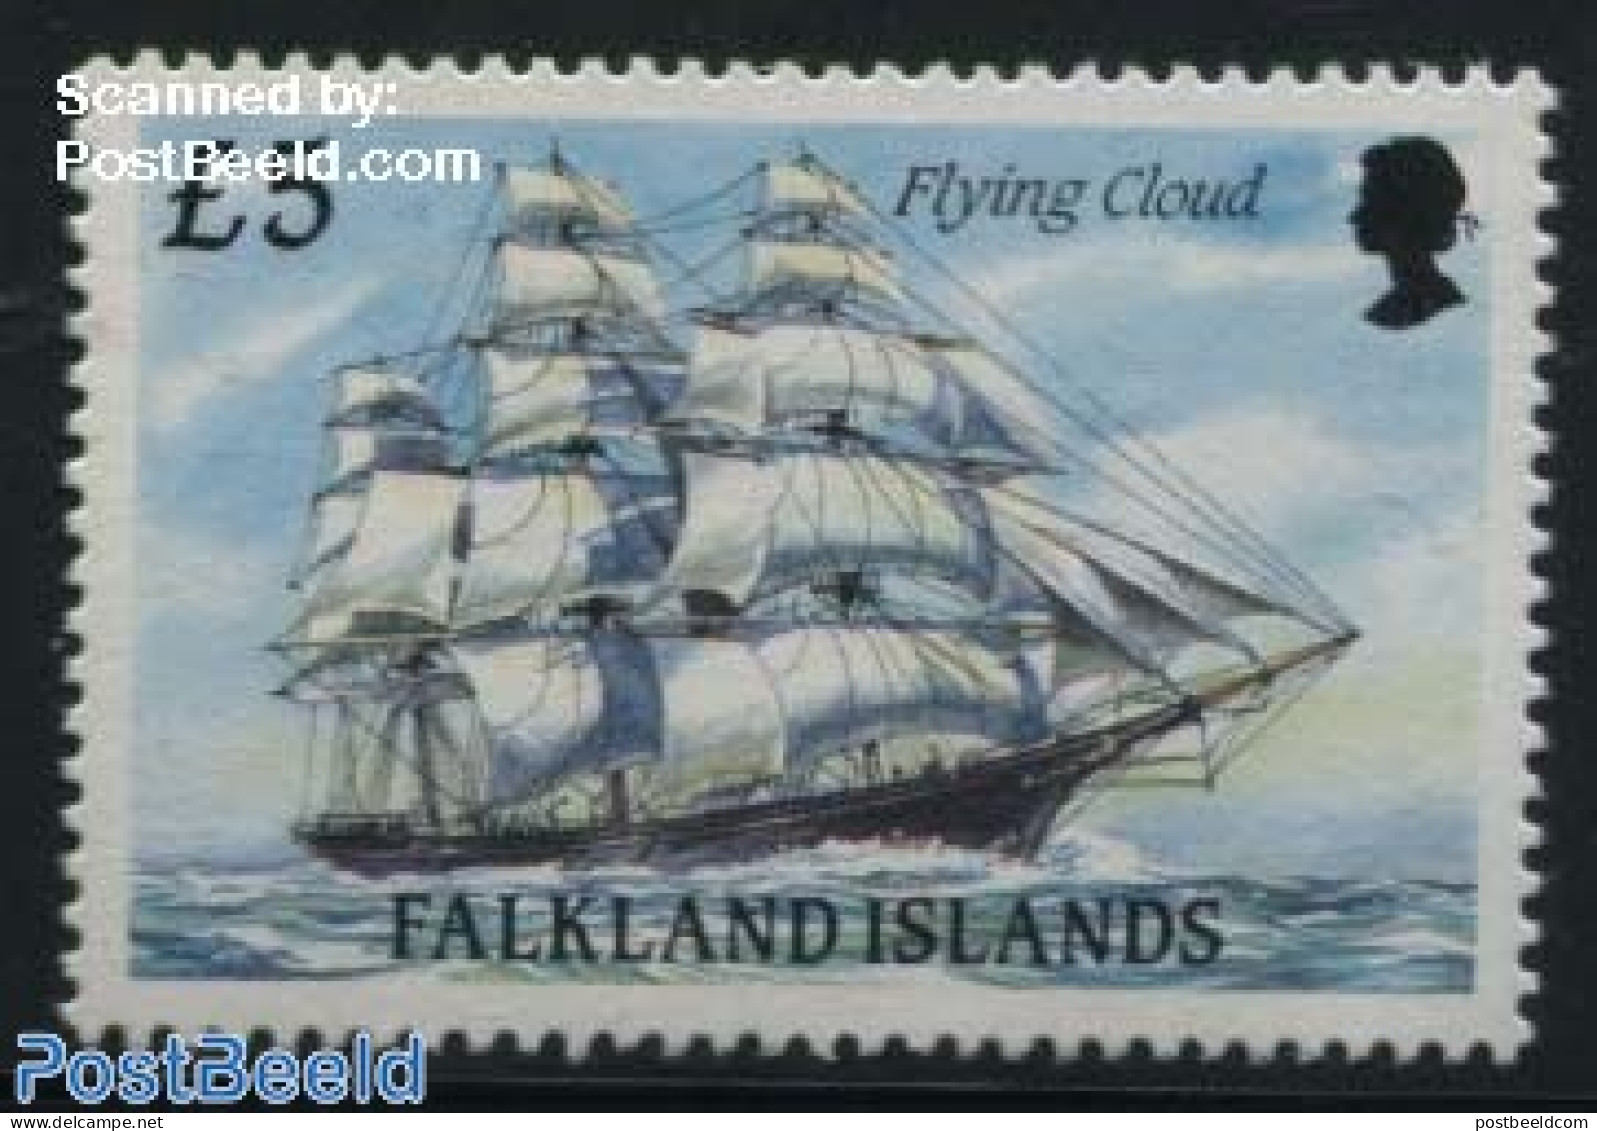 Falkland Islands 1990 Definitive, Ship 1v, Mint NH, Transport - Ships And Boats - Ships